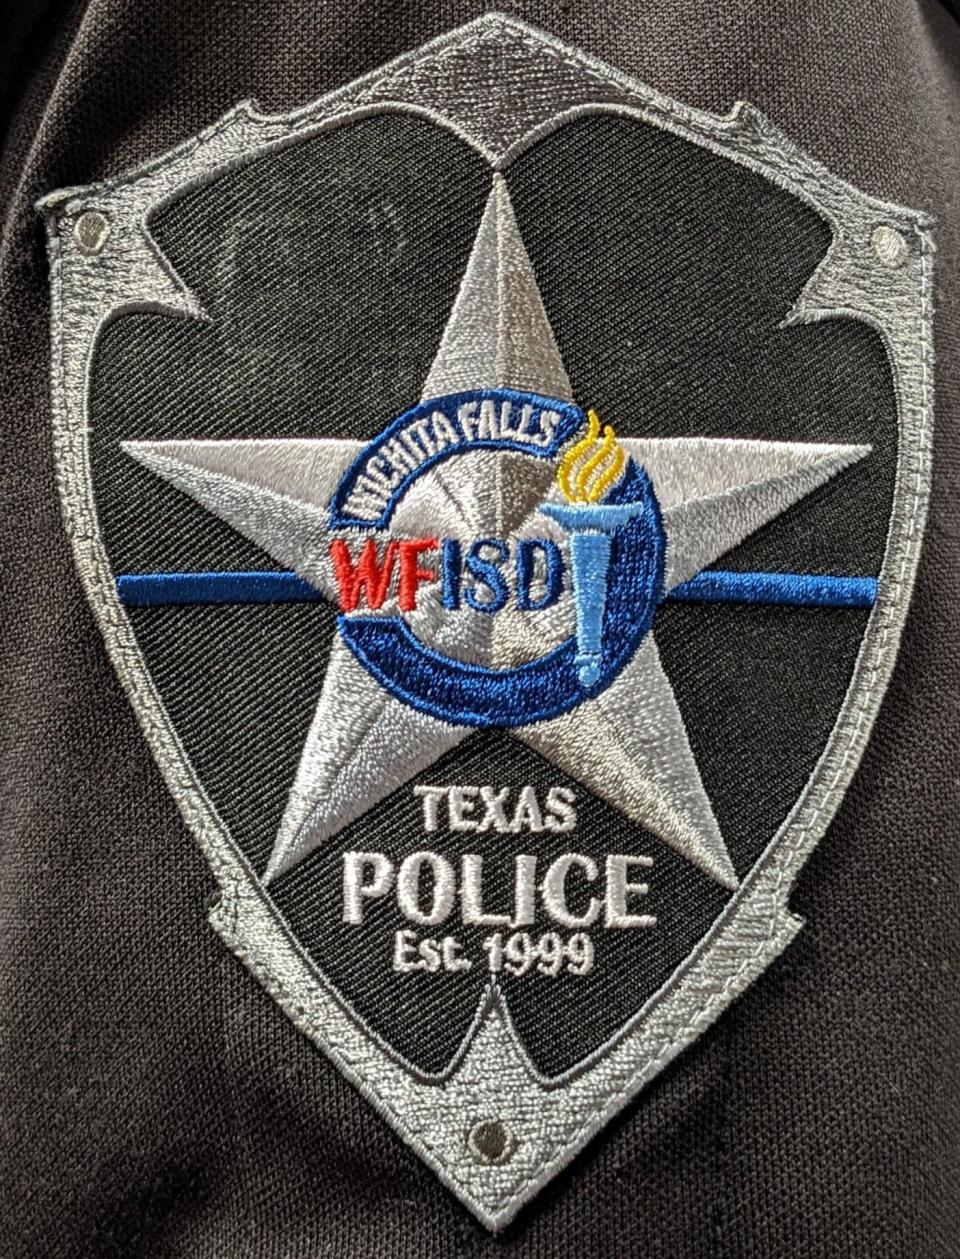 Wichita Falls ISD police patch